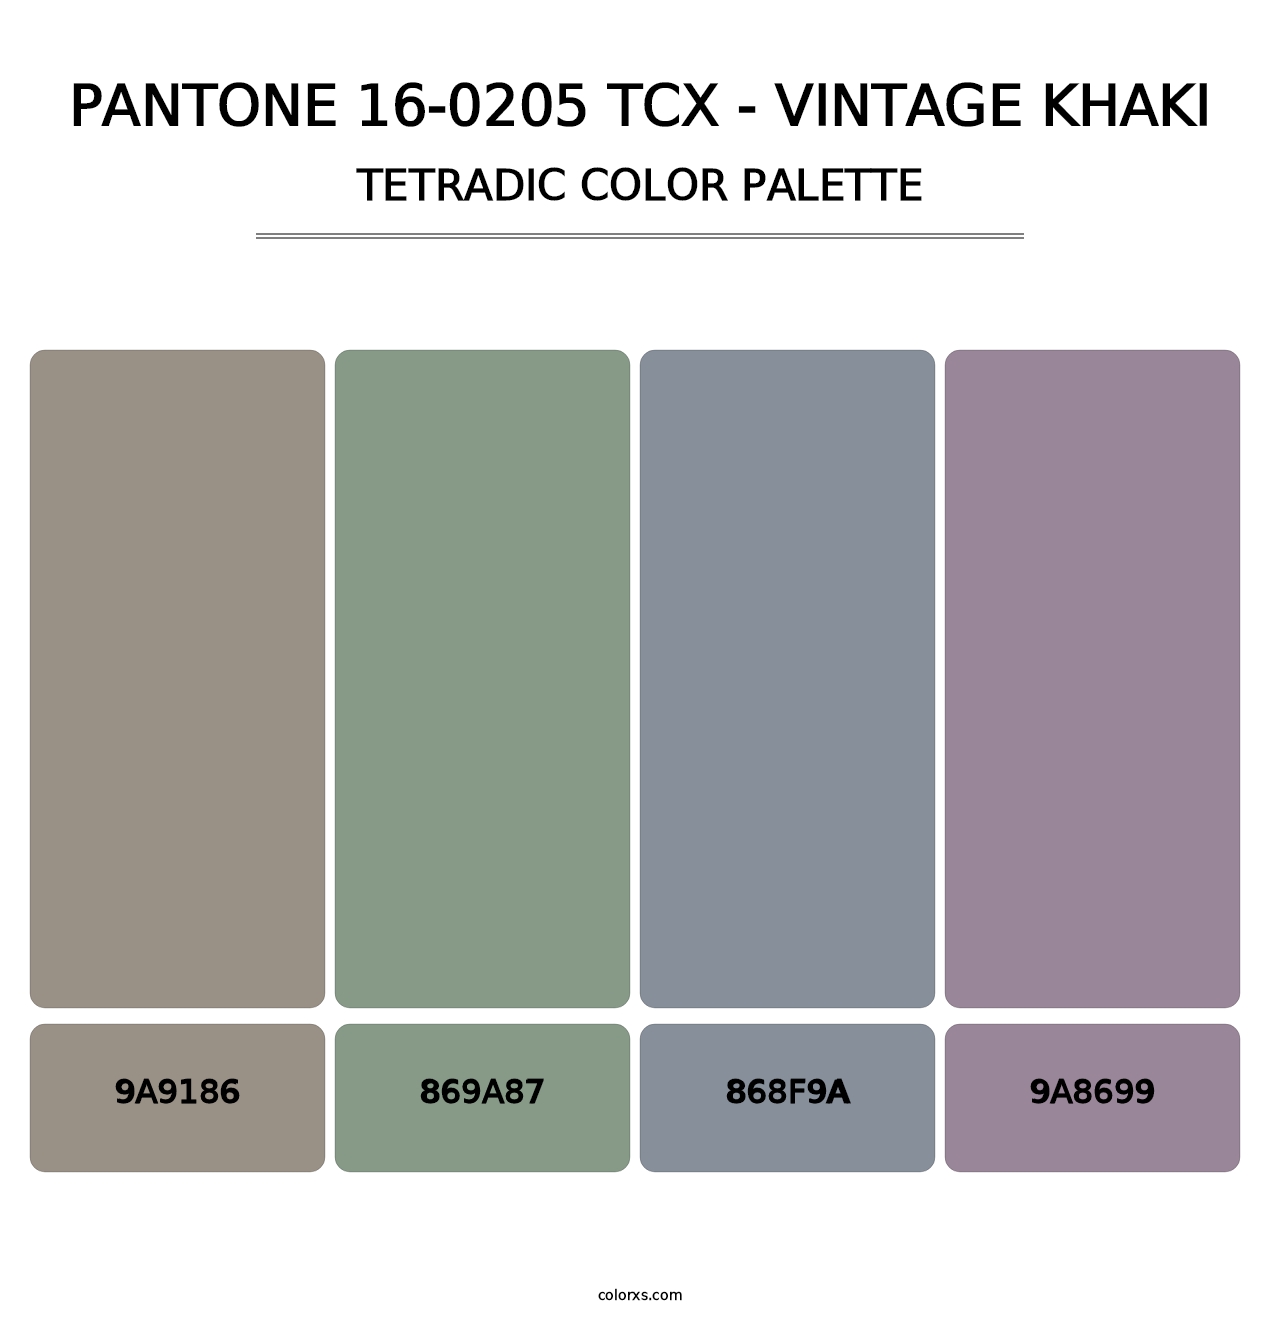 PANTONE 16-0205 TCX - Vintage Khaki - Tetradic Color Palette